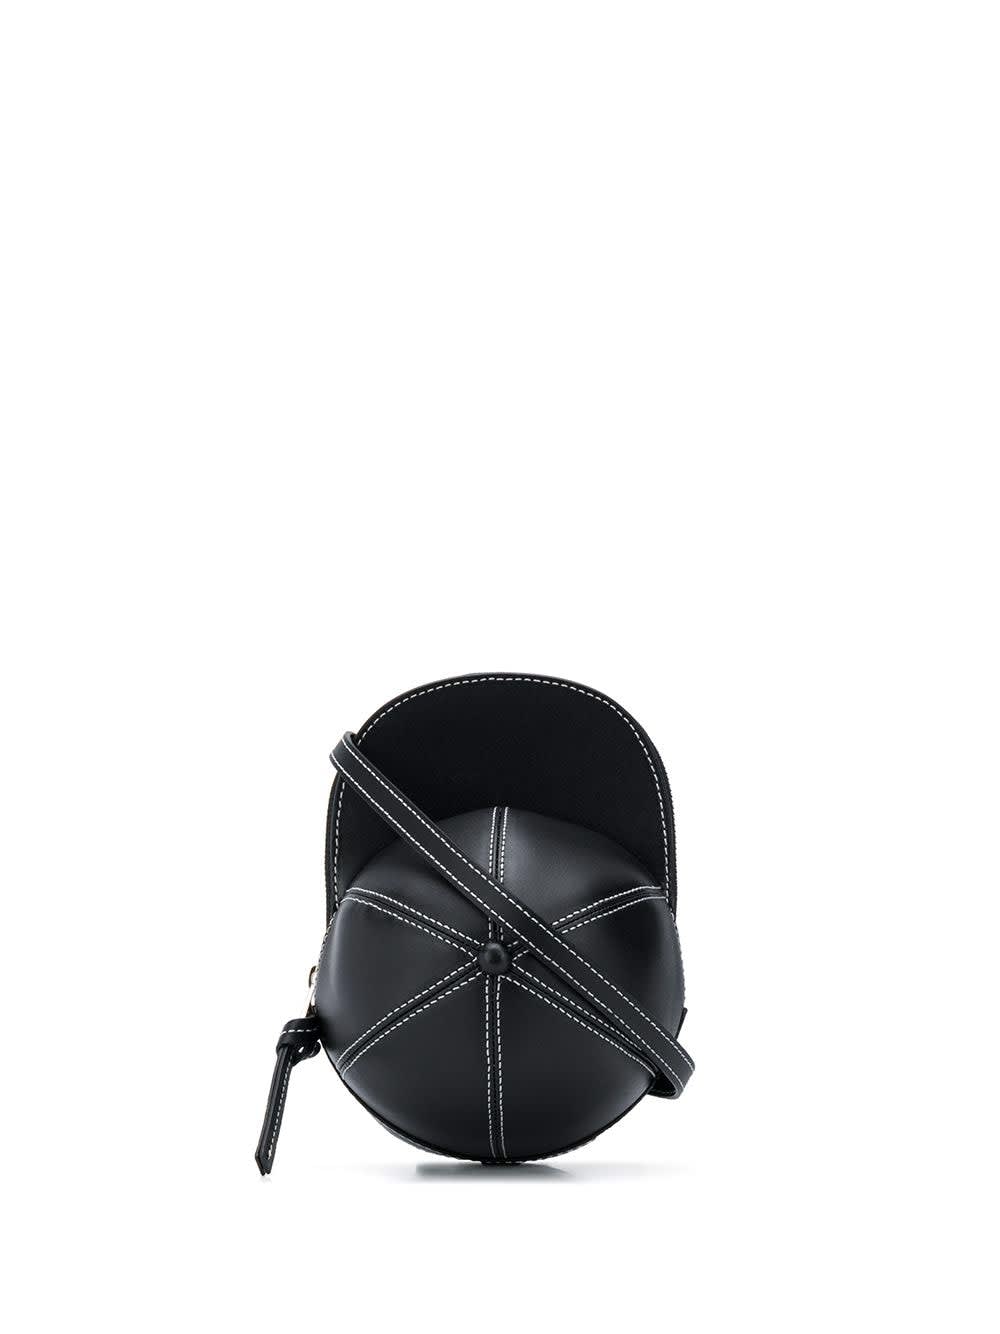 JW Anderson midi cap bag (Color: Black)